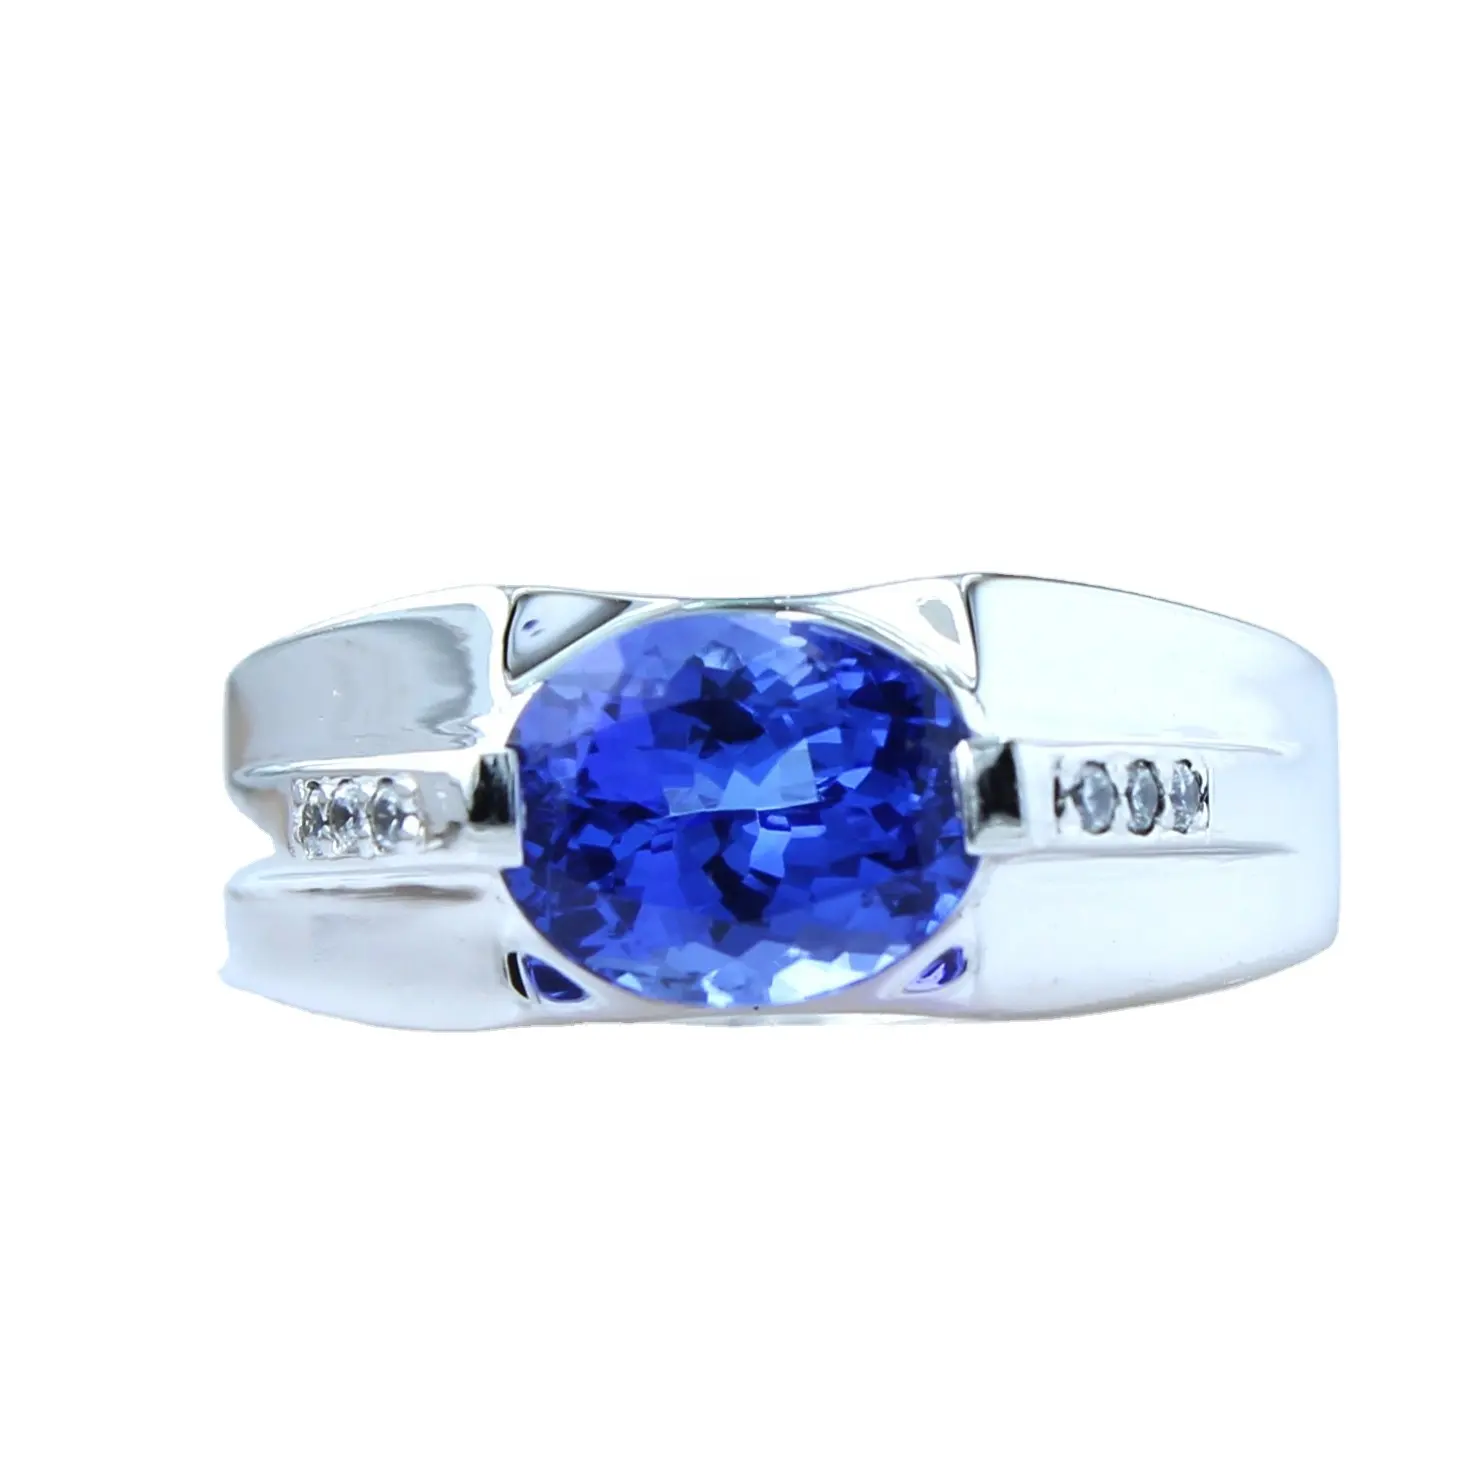 Cincin batu permata perak murni pria, perhiasan cincin kristal biru Oval Zirconia batu permata untuk pria